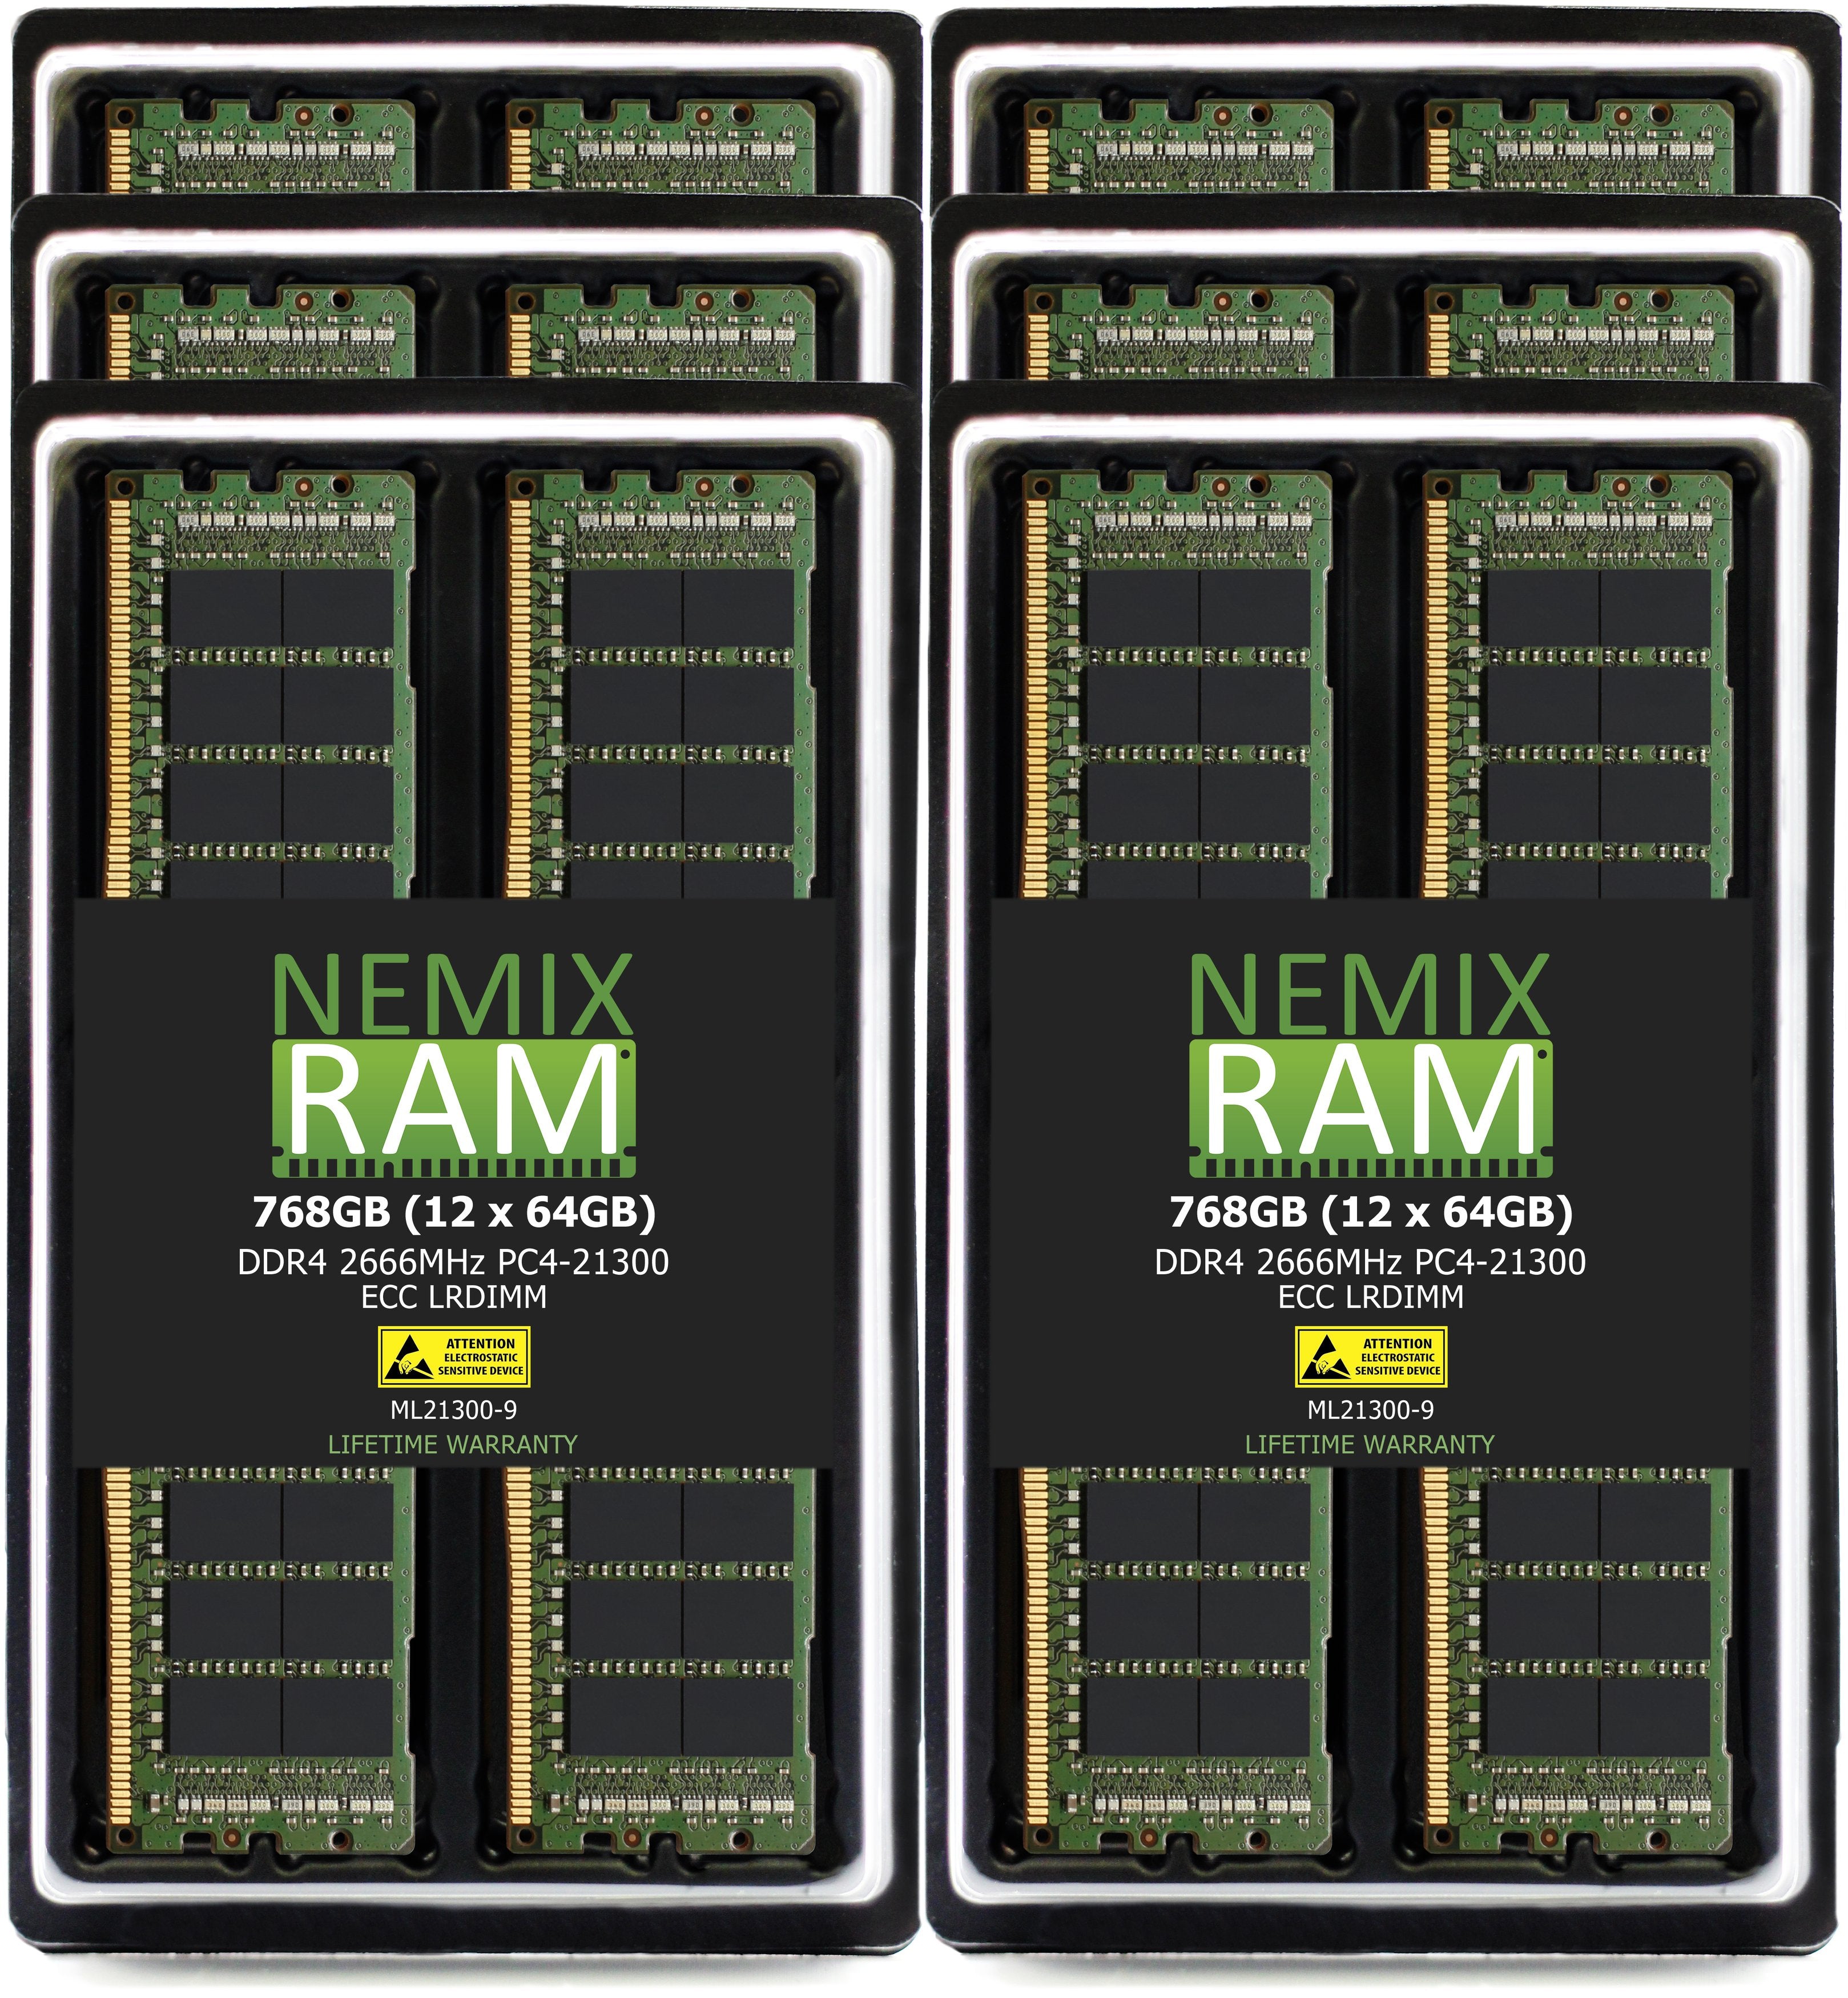 DDR4 2666MHZ PC4-21300 LRDIMM 4RX4